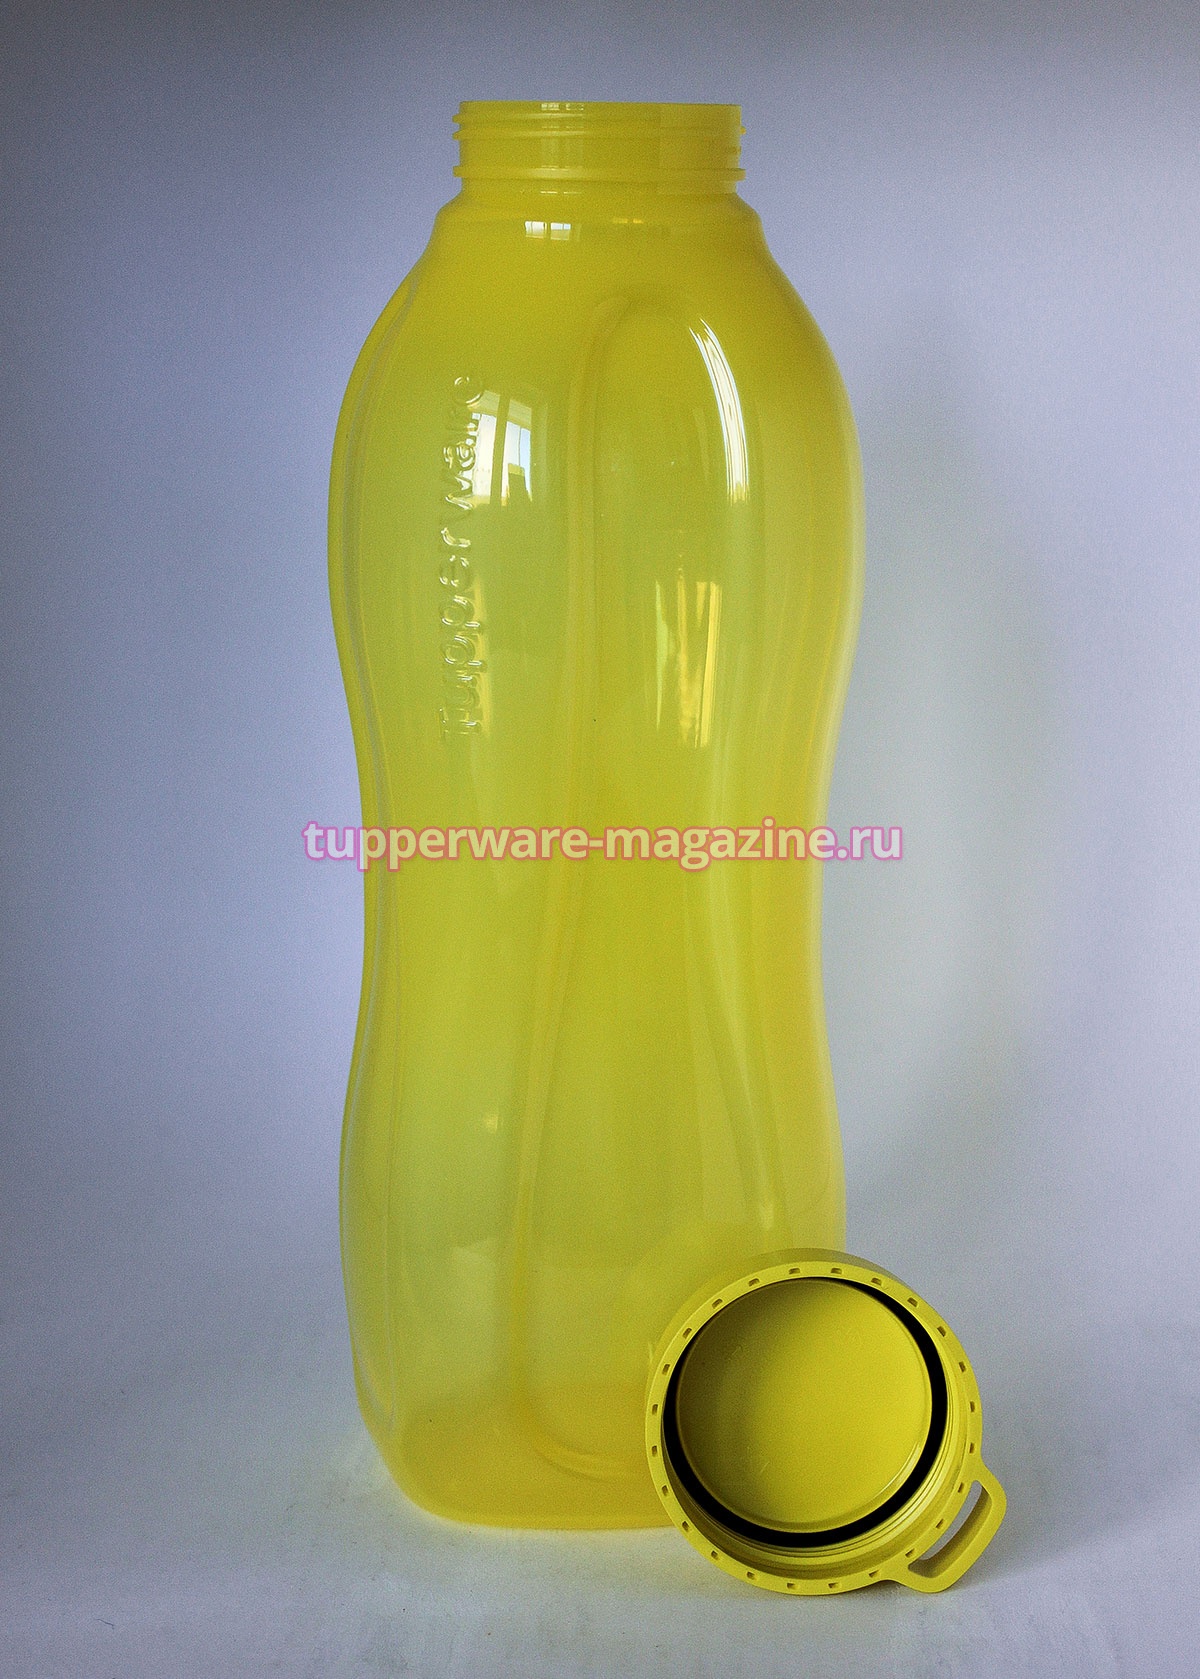 Эко-бутылка 1,5 л без клапана в желтом цвете с широким горлышком